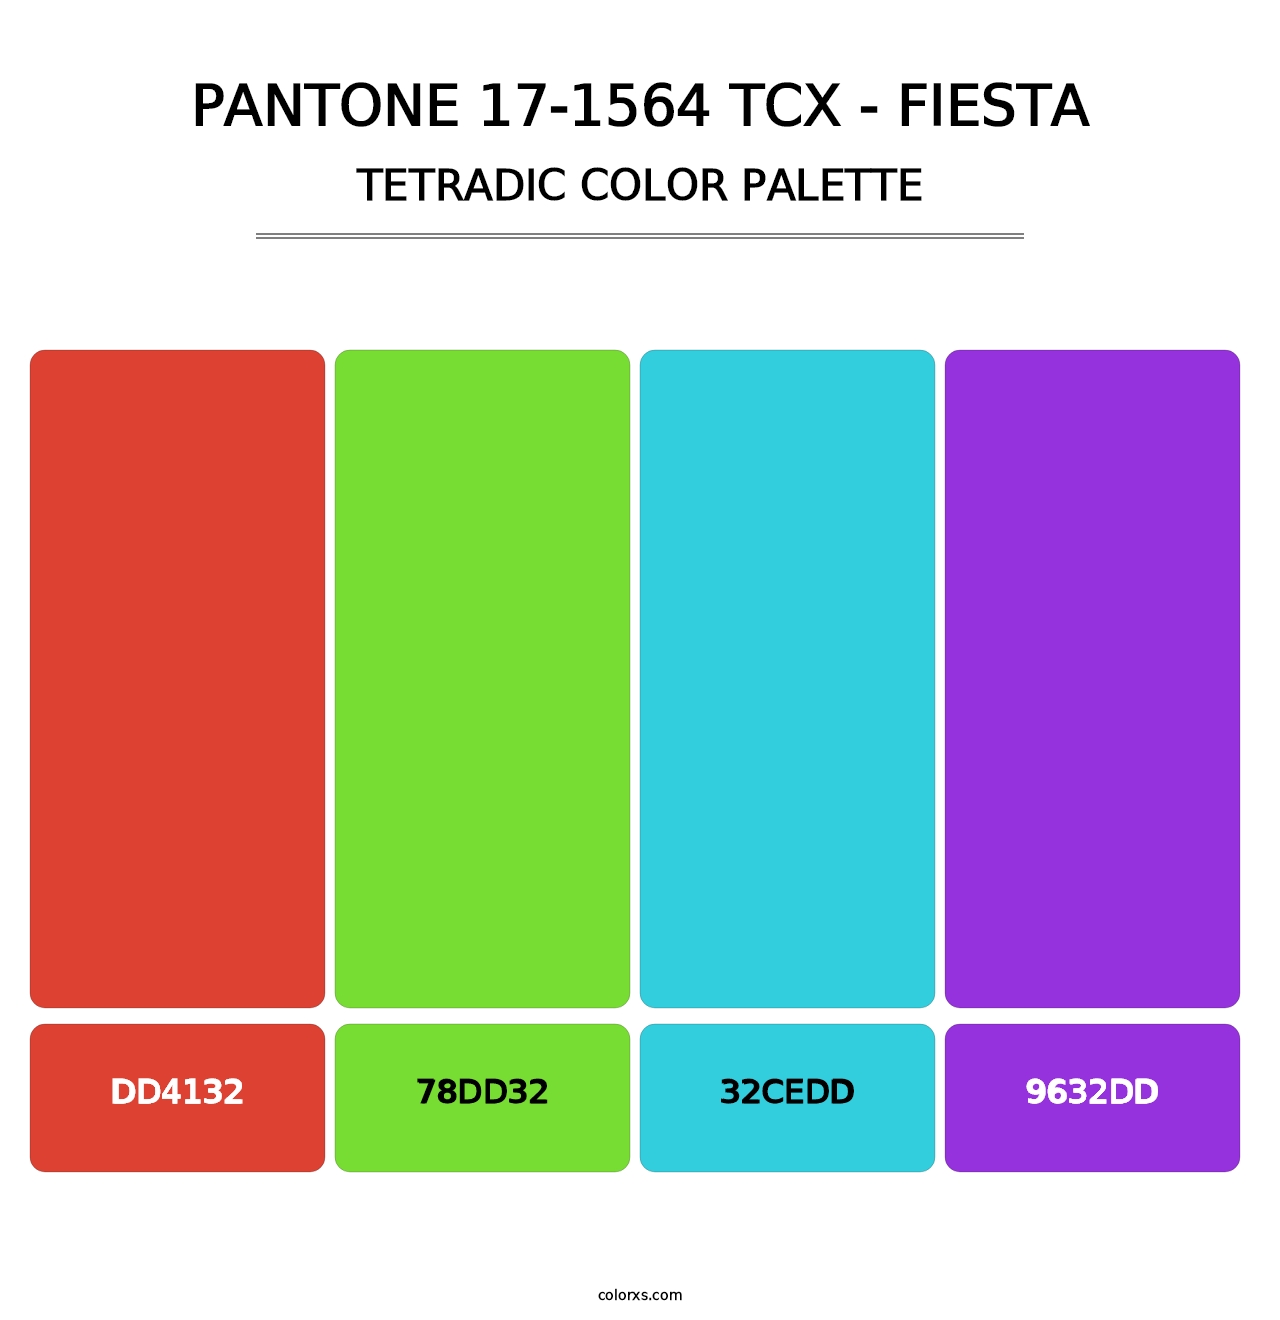 PANTONE 17-1564 TCX - Fiesta - Tetradic Color Palette